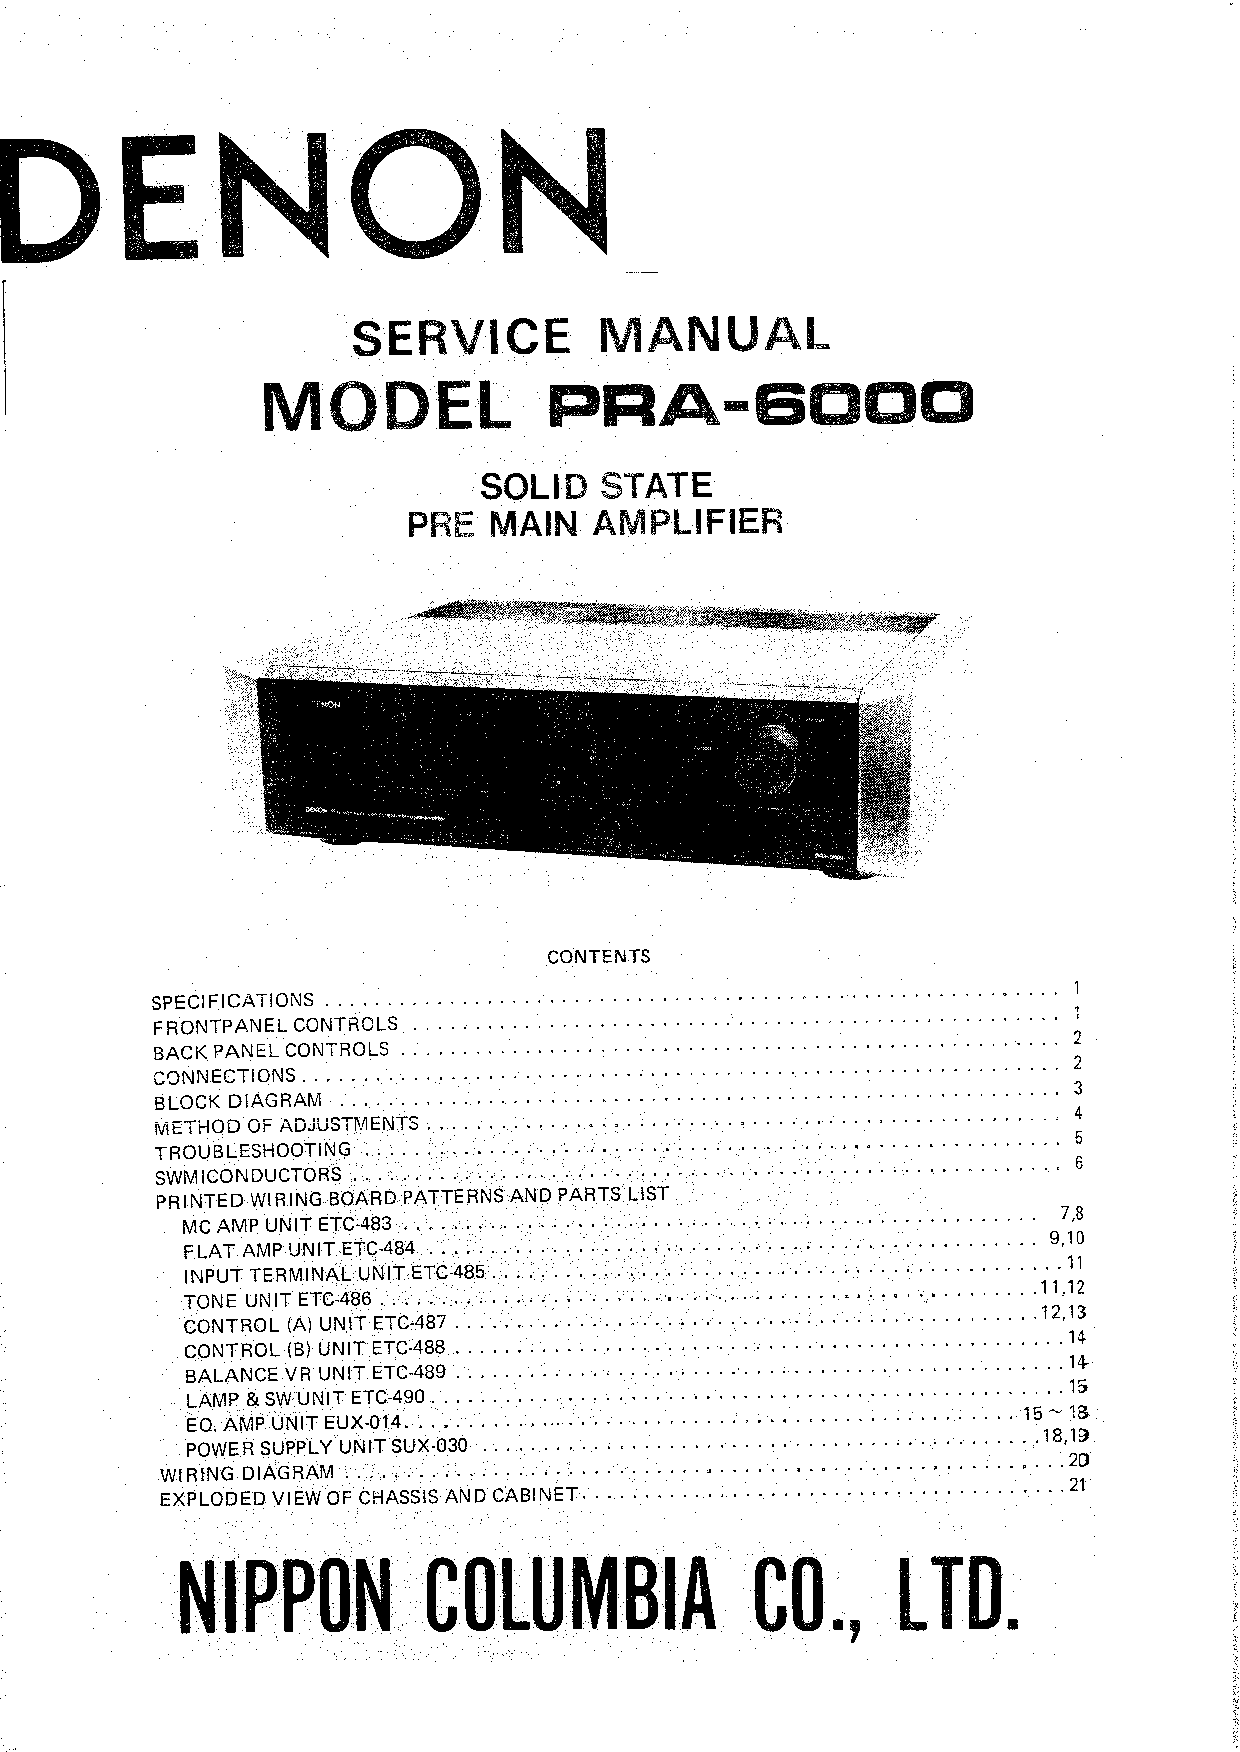 Denon PRA-6000 Service Manual